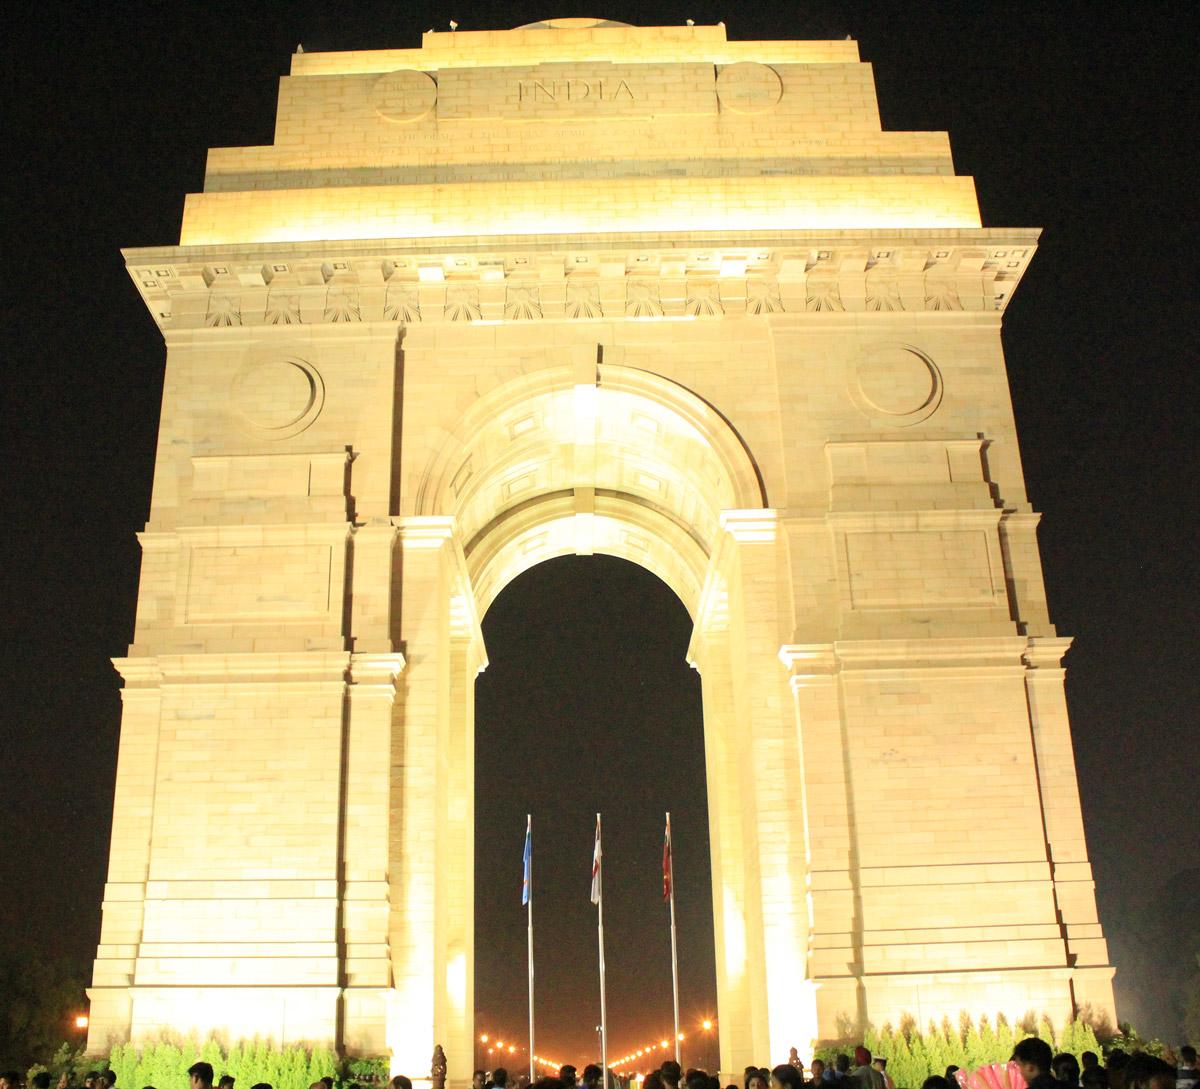 Hd India Gate Image Gate Wallpaper Download